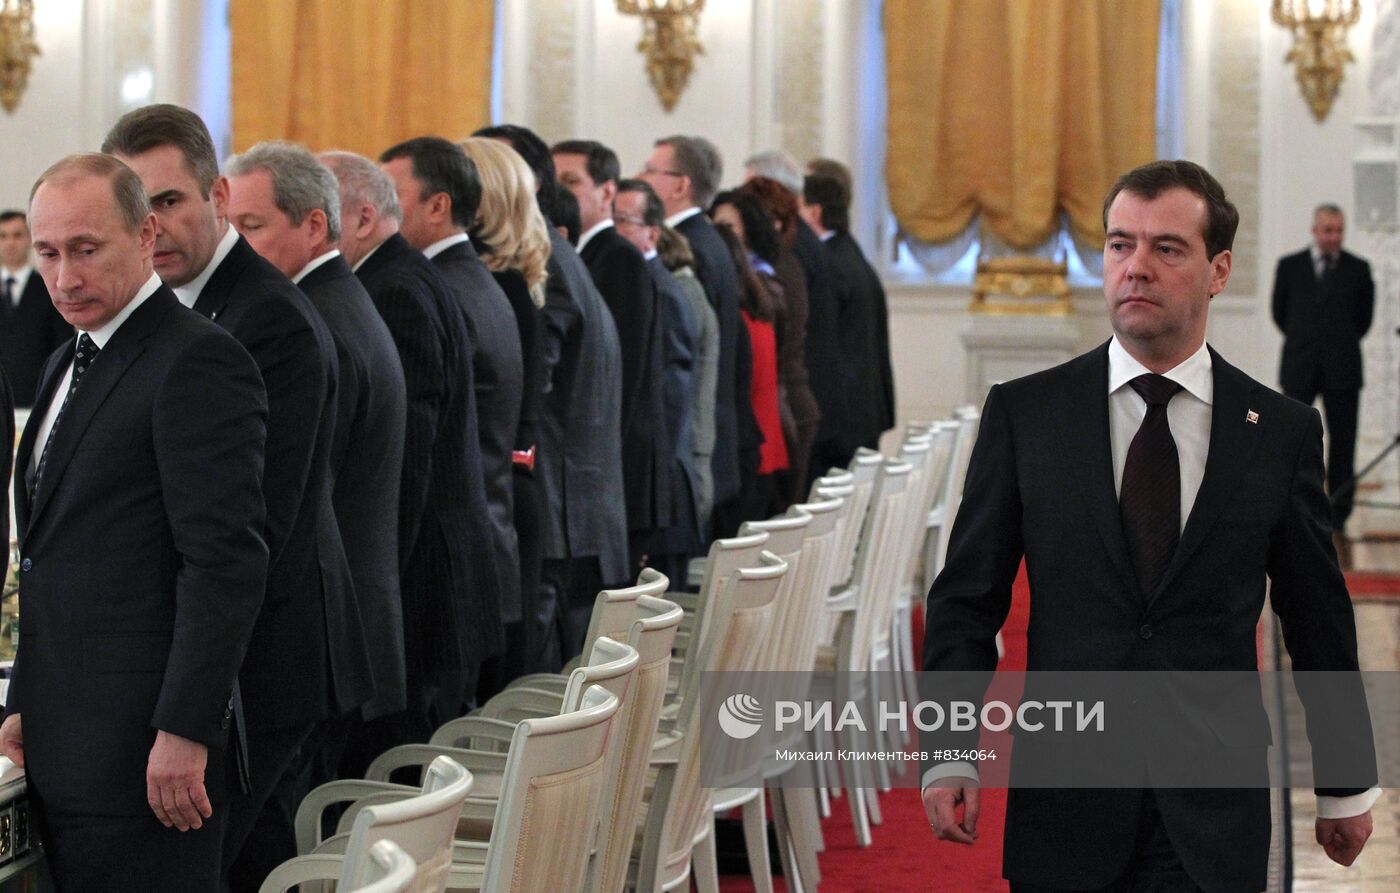 Д.Медведев и В.Путин на заседании Госсовета РФ